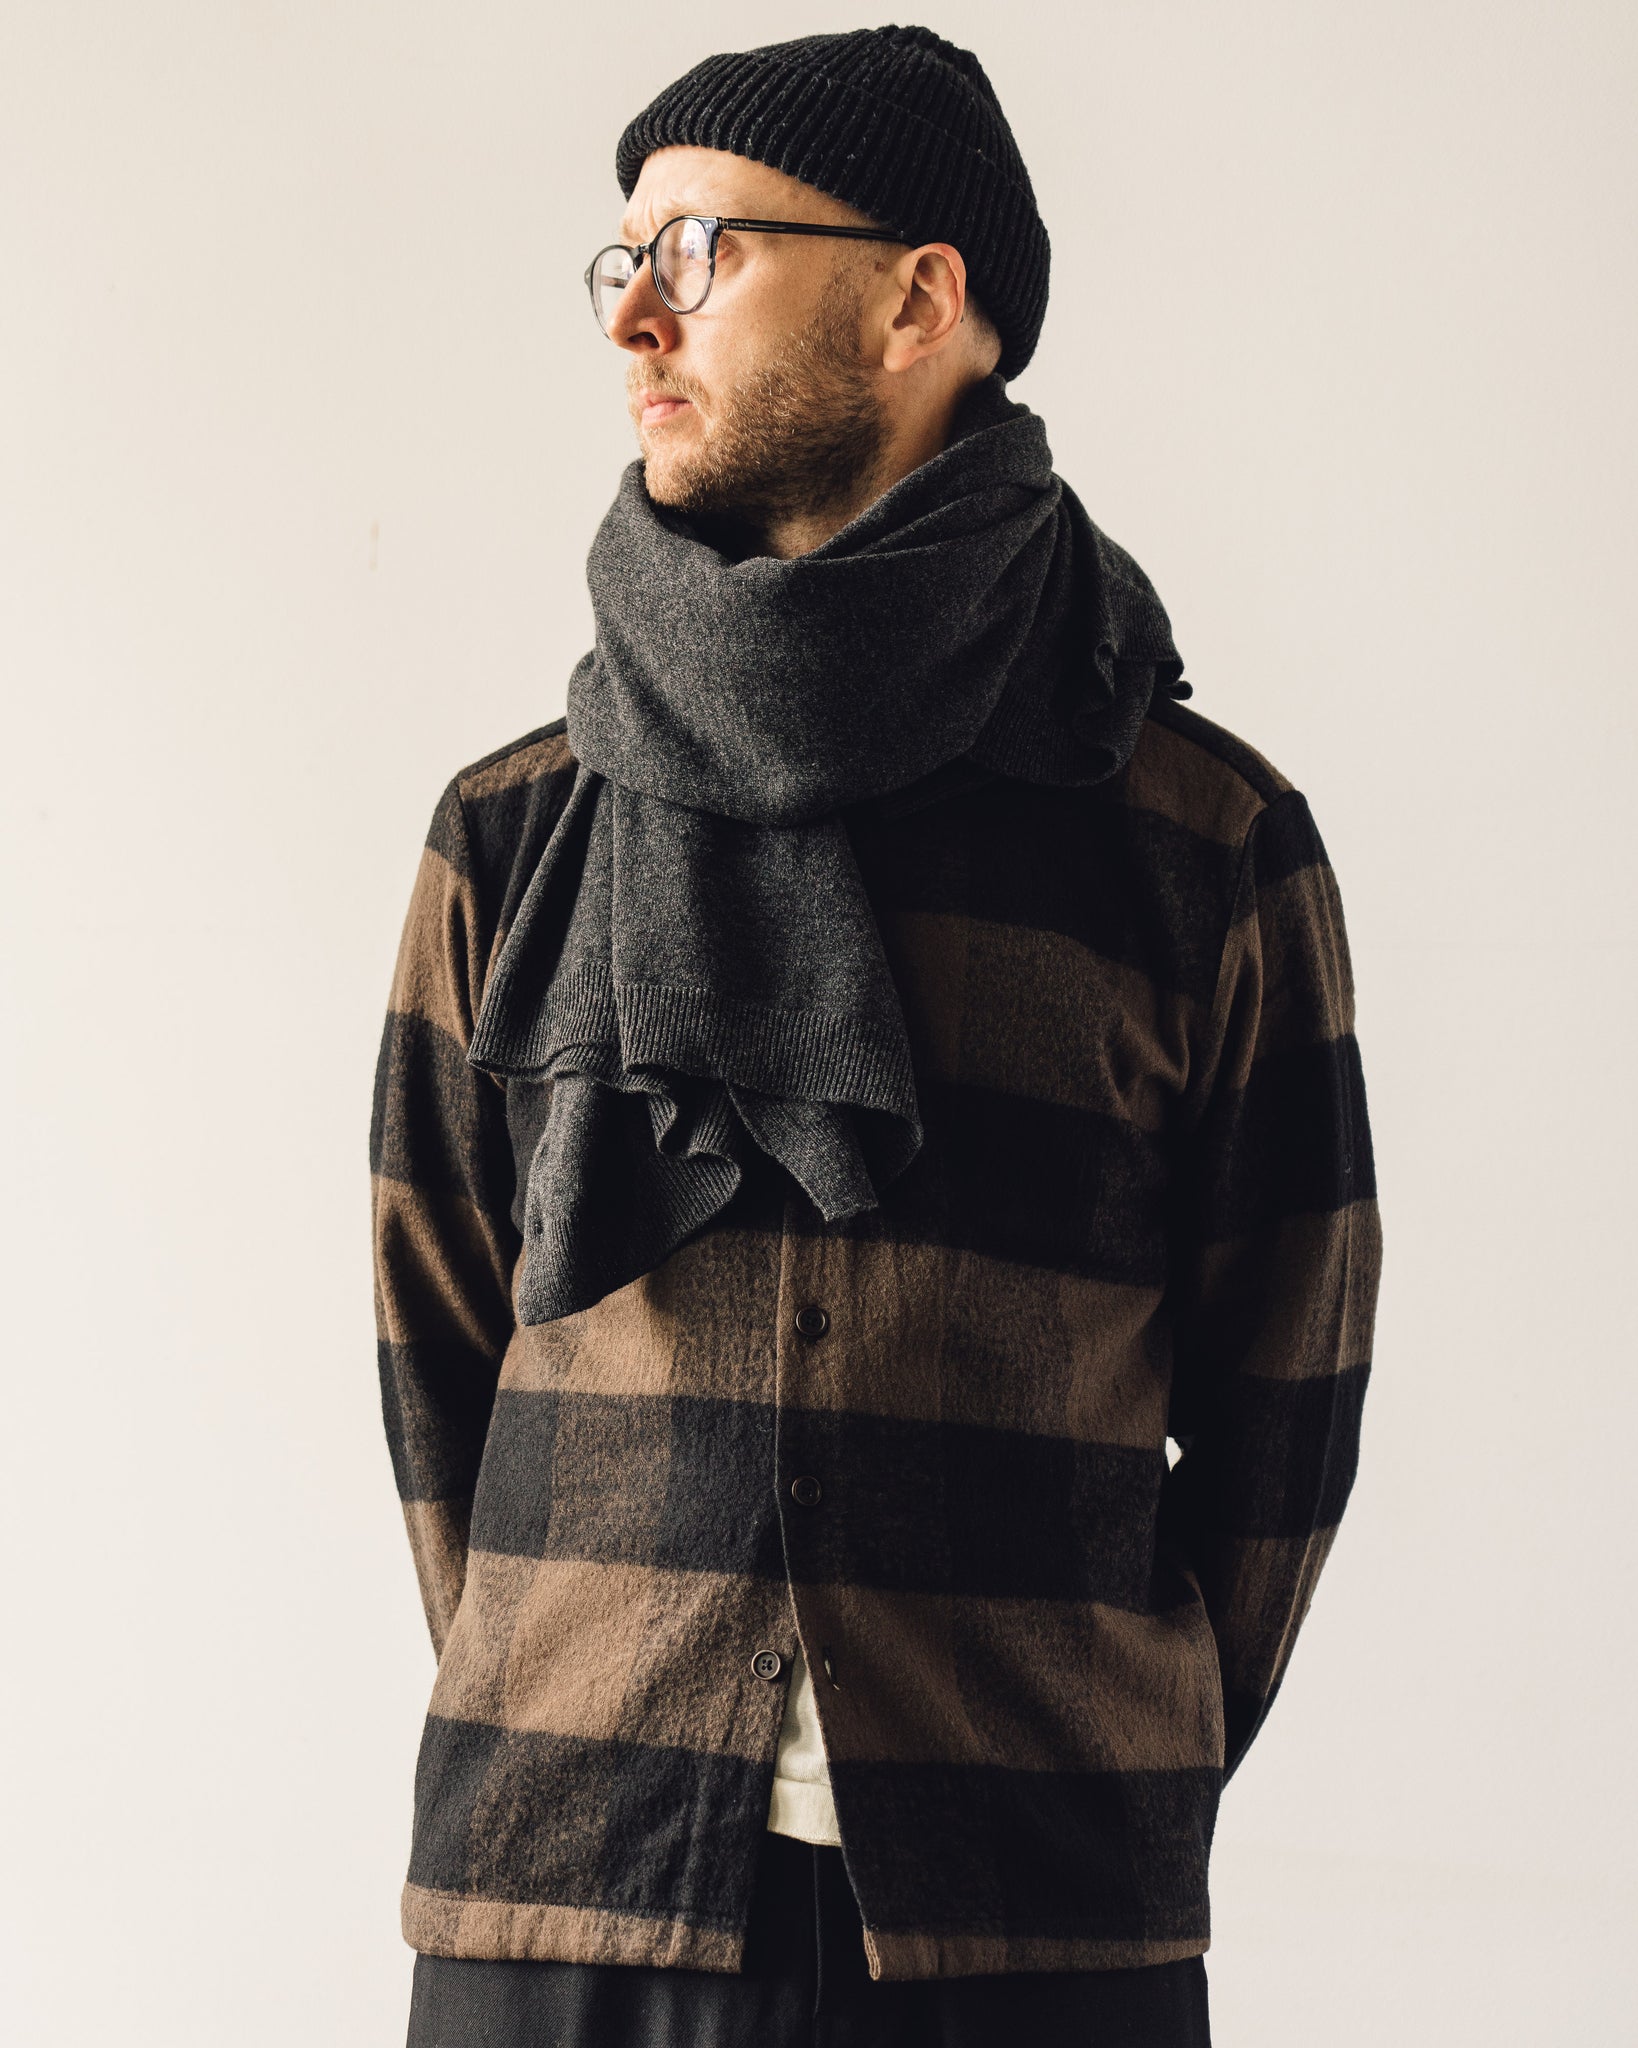 Evan Kinori Roll Neck Sweater, Brown Cashmere/Lambswool